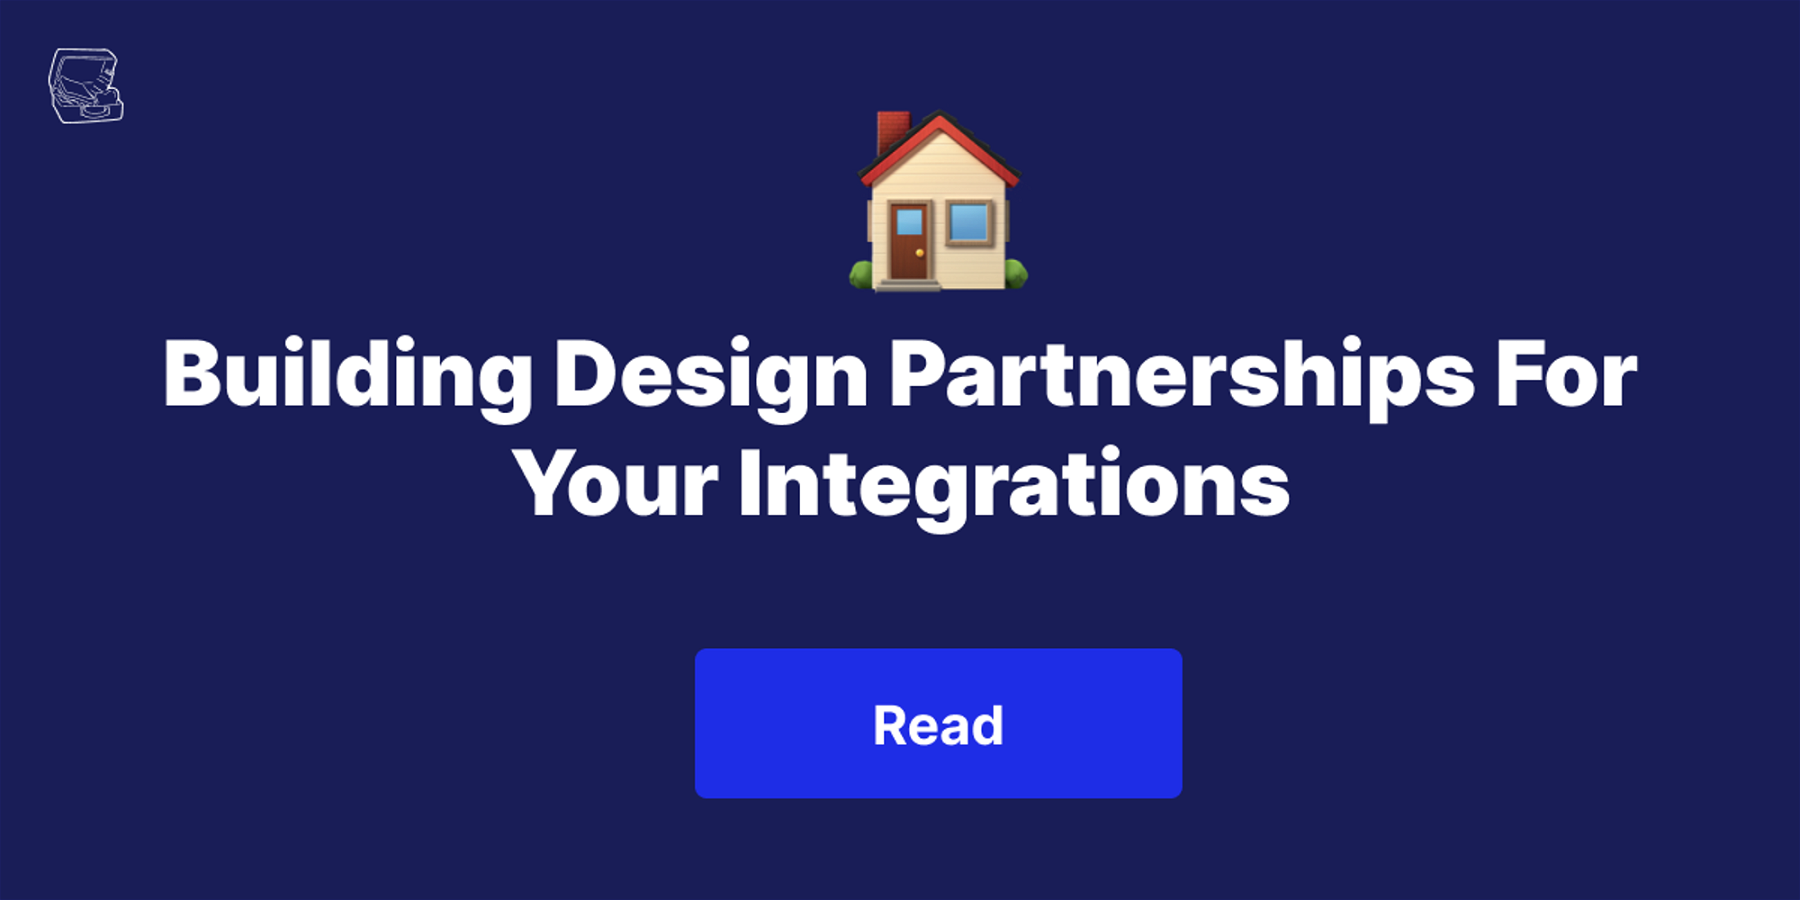 Building Design Partnerships for Your Integrations